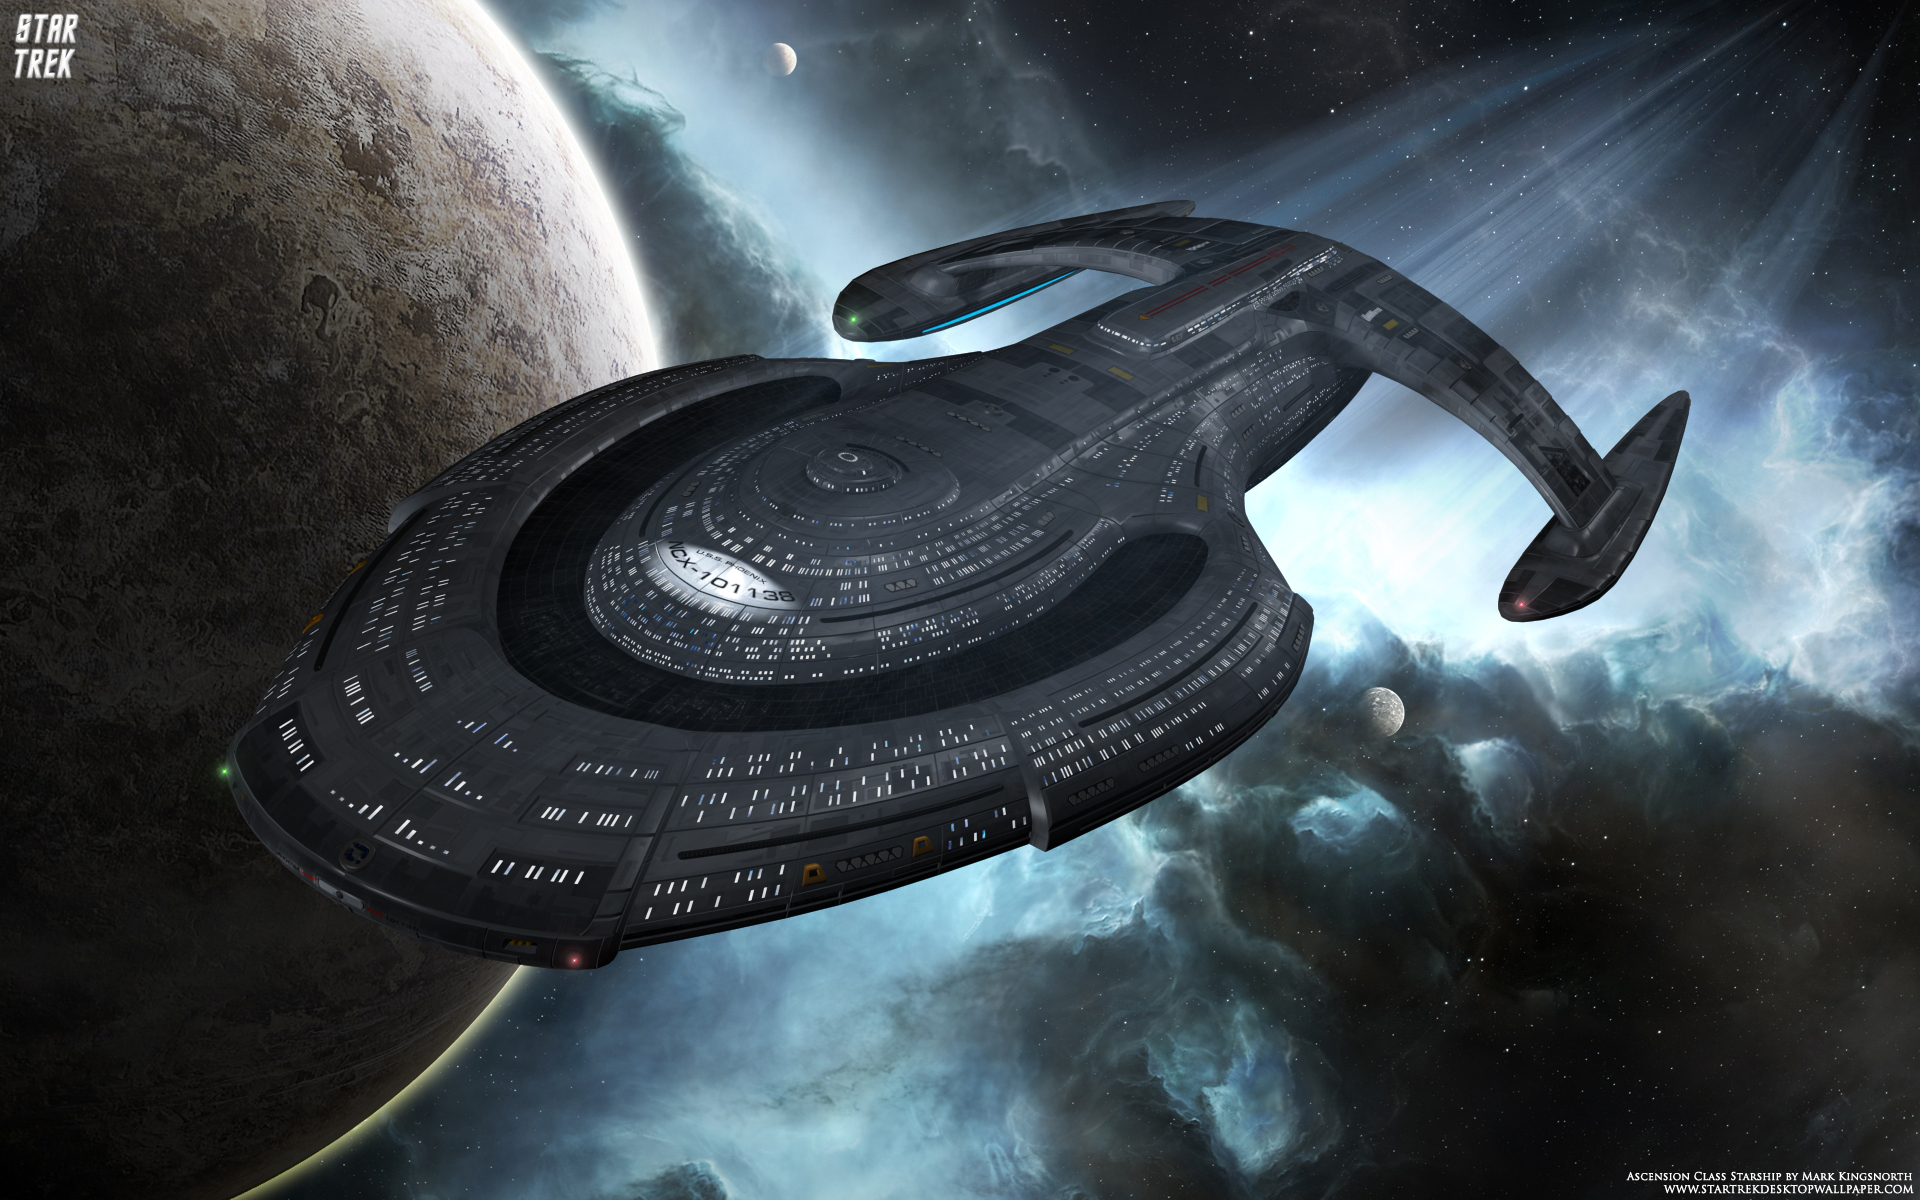 Starship Star Trek Puter Desktop Wallpaper Pictures Image